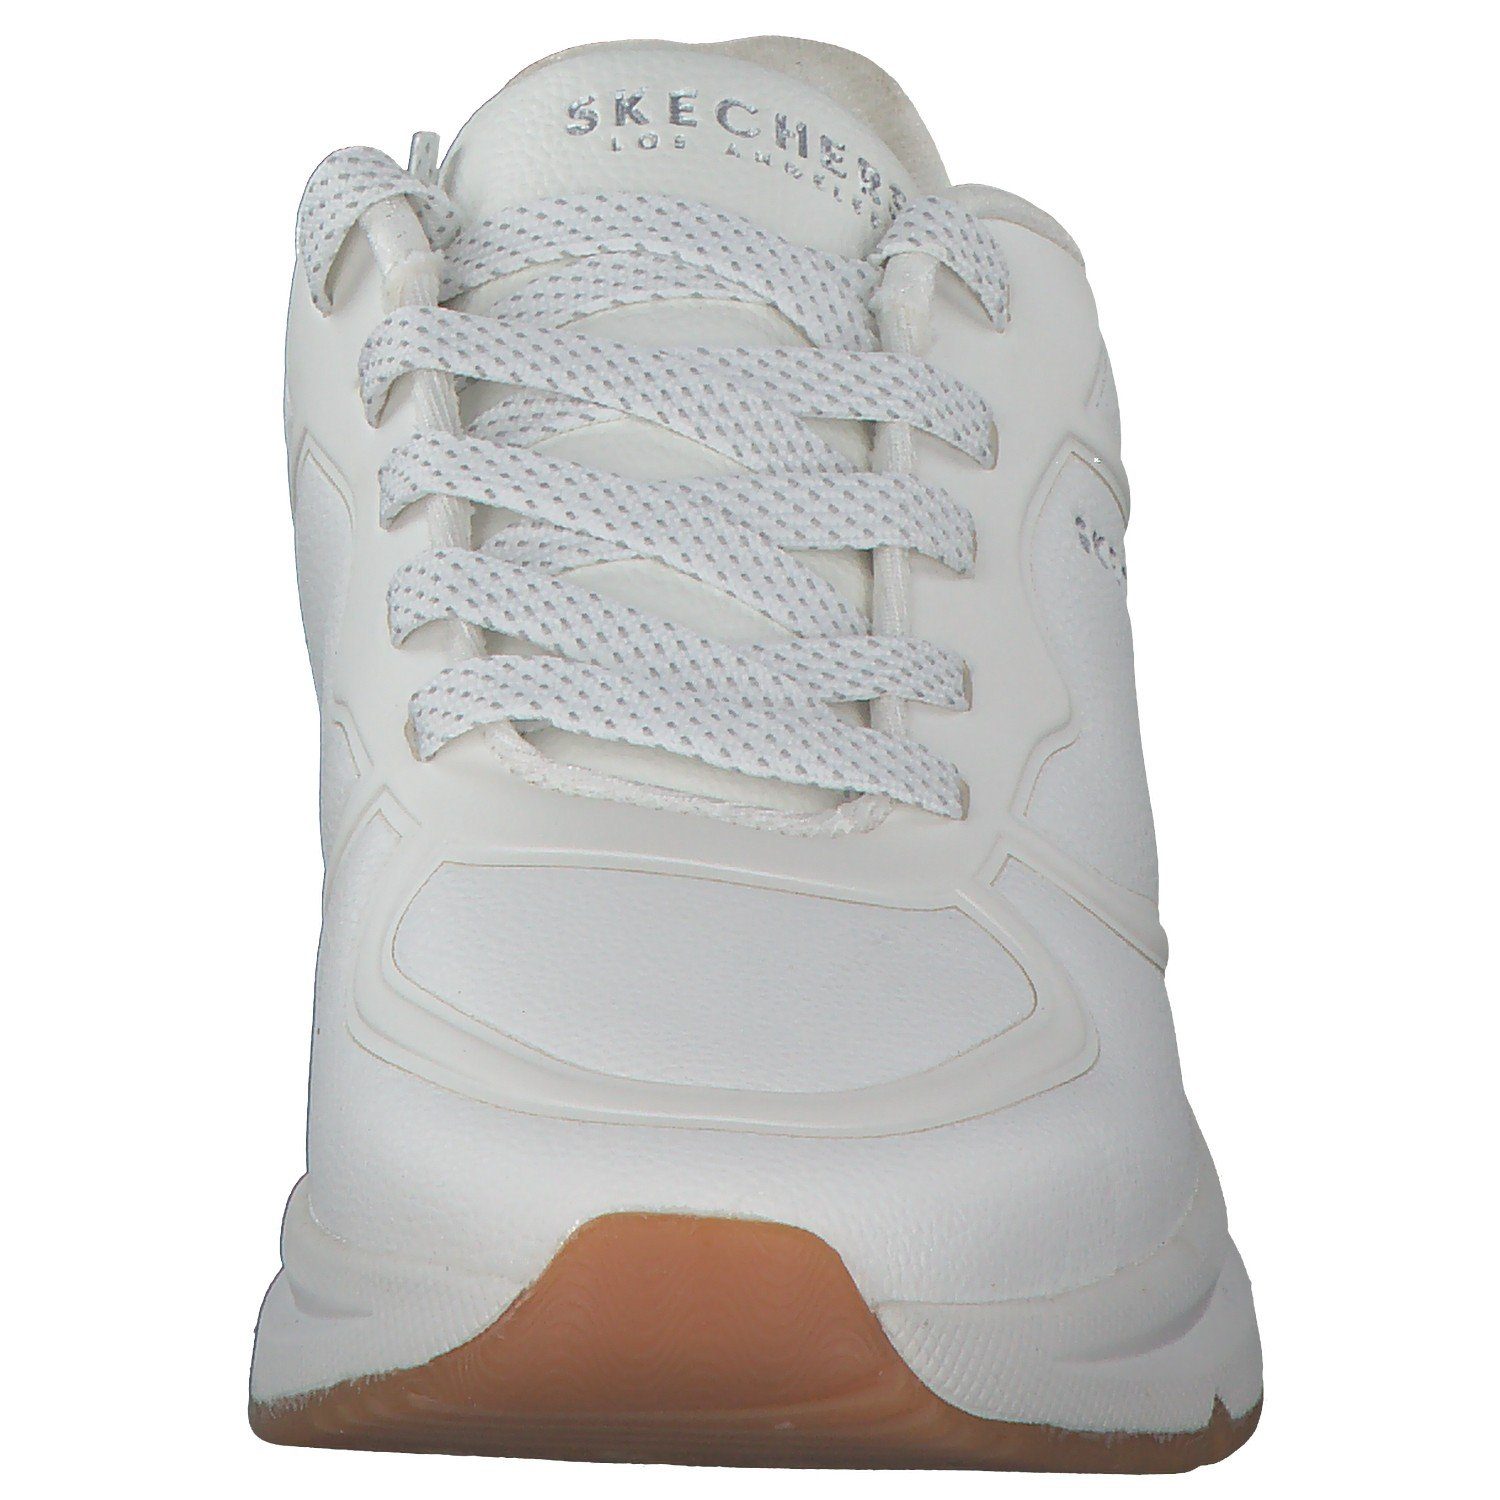 Fit Mile Sneaker melt Skechers WHT Makers white/hot (20202633) Skechers 155570 Arch S-Miles